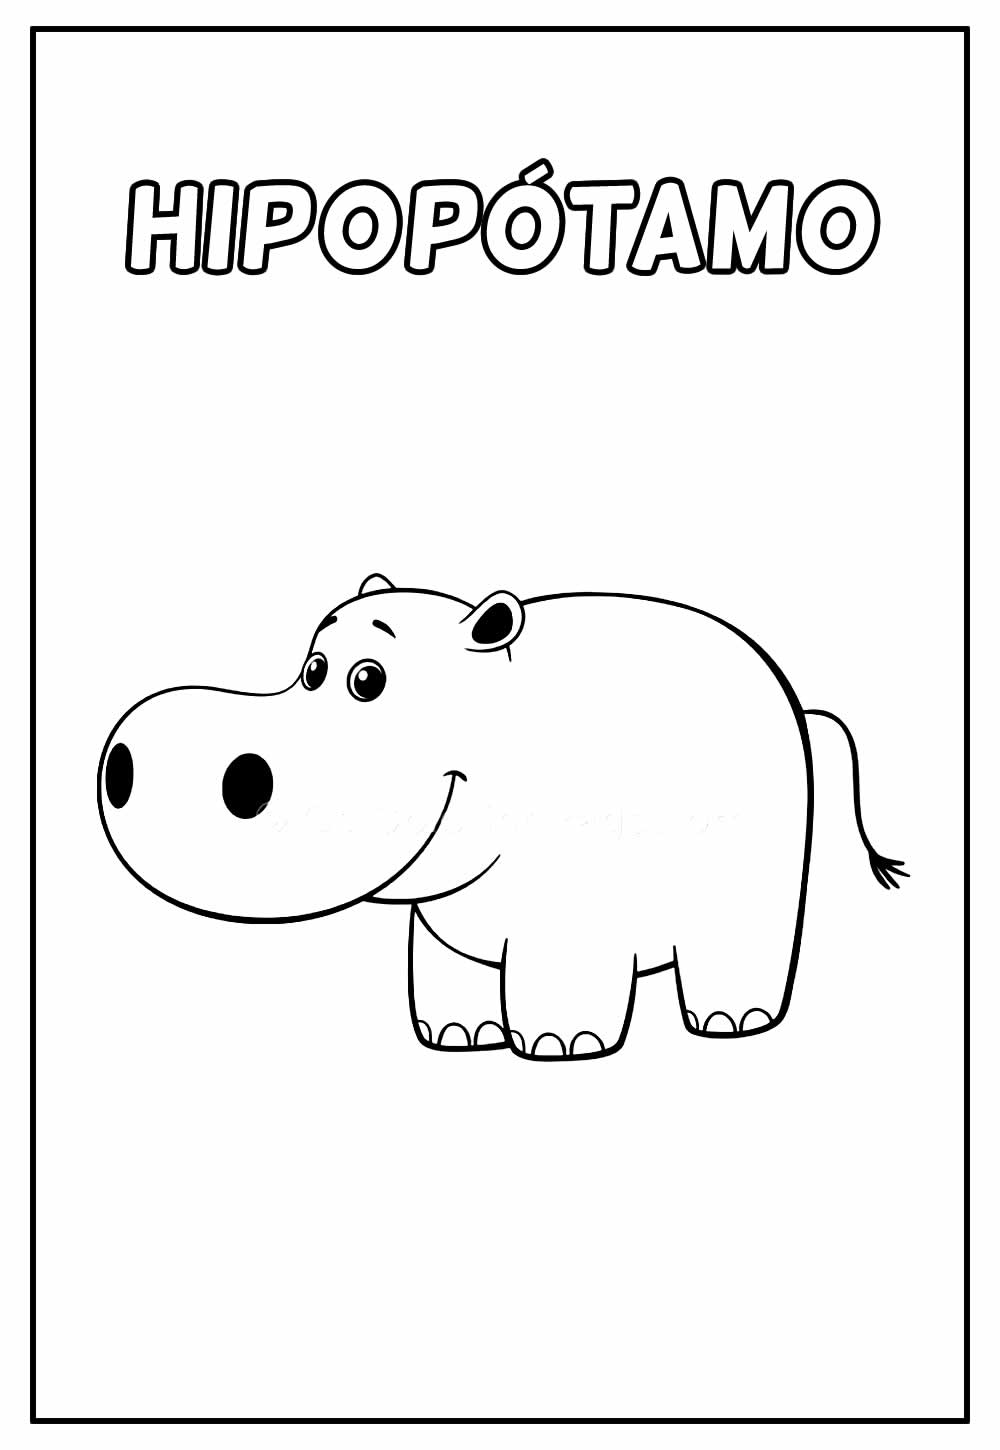 Desenho Educativo de Hipopótamo para colorir